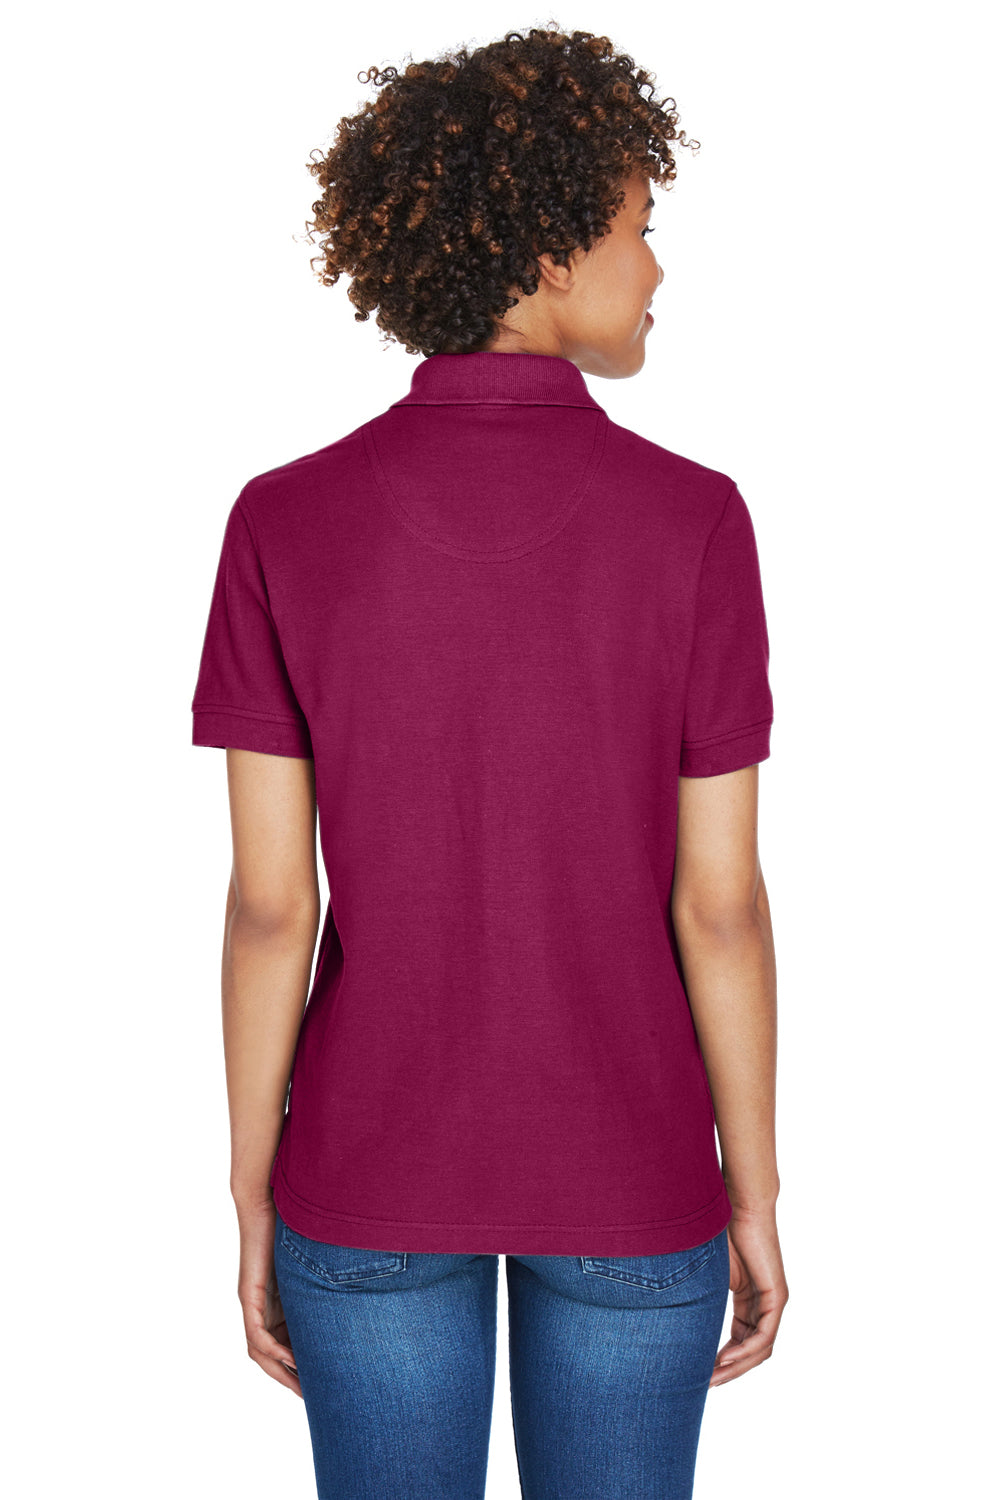 UltraClub 8541 Womens Whisper Short Sleeve Polo Shirt Wine Red Back